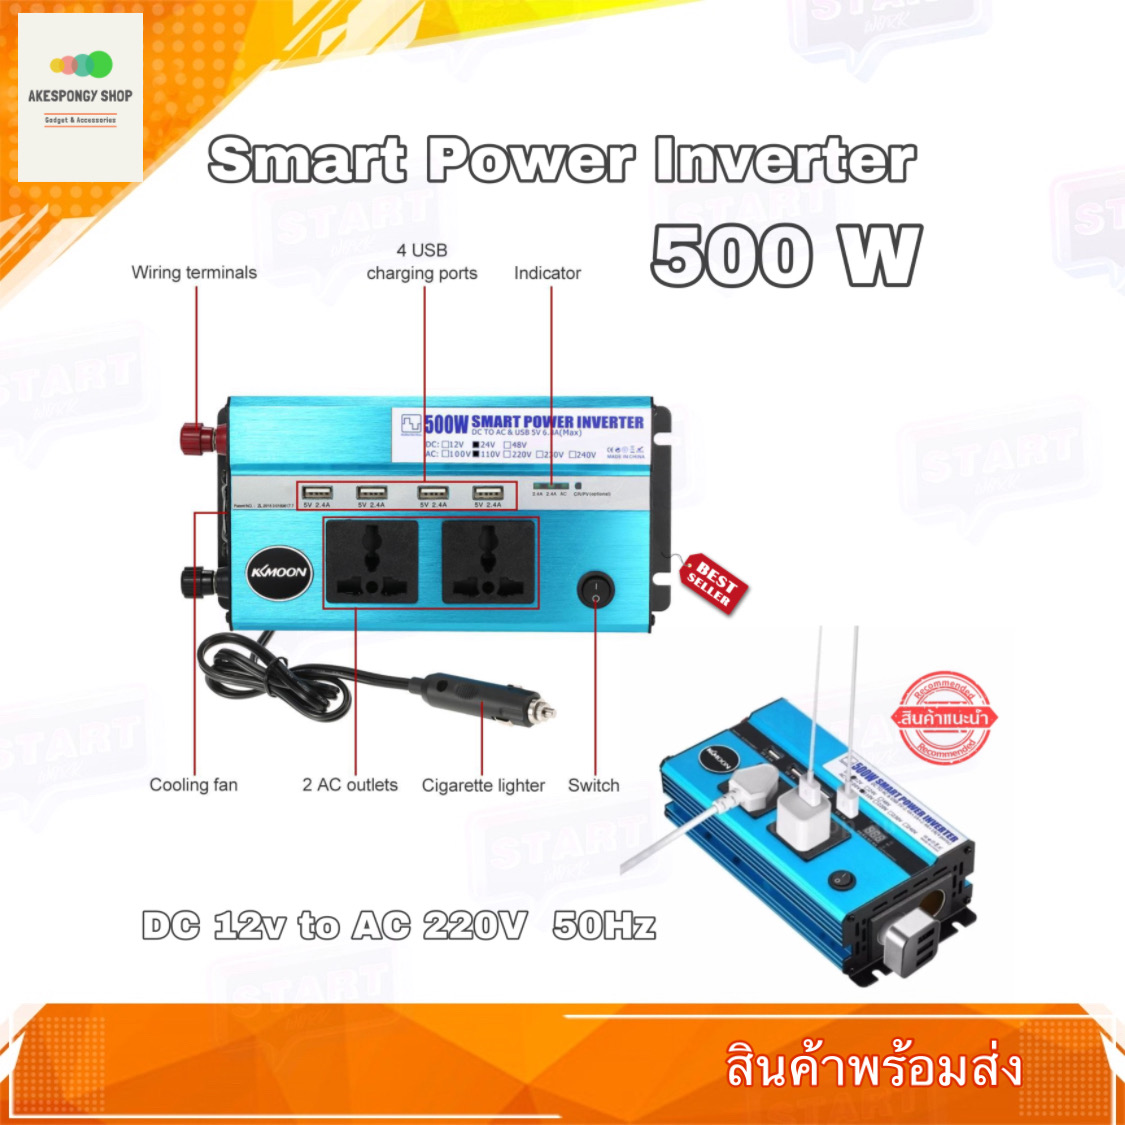 Smart Power Inverter DC 12V to AC 220V 50Hz สมาร์ทอินเวอร์เตอร์ กำลังไฟฟ้า 500W w/4 USB Ports 2 AC Outlets Black มีช่องต่อหลอดไฟ DC และช่องเสียบ USB